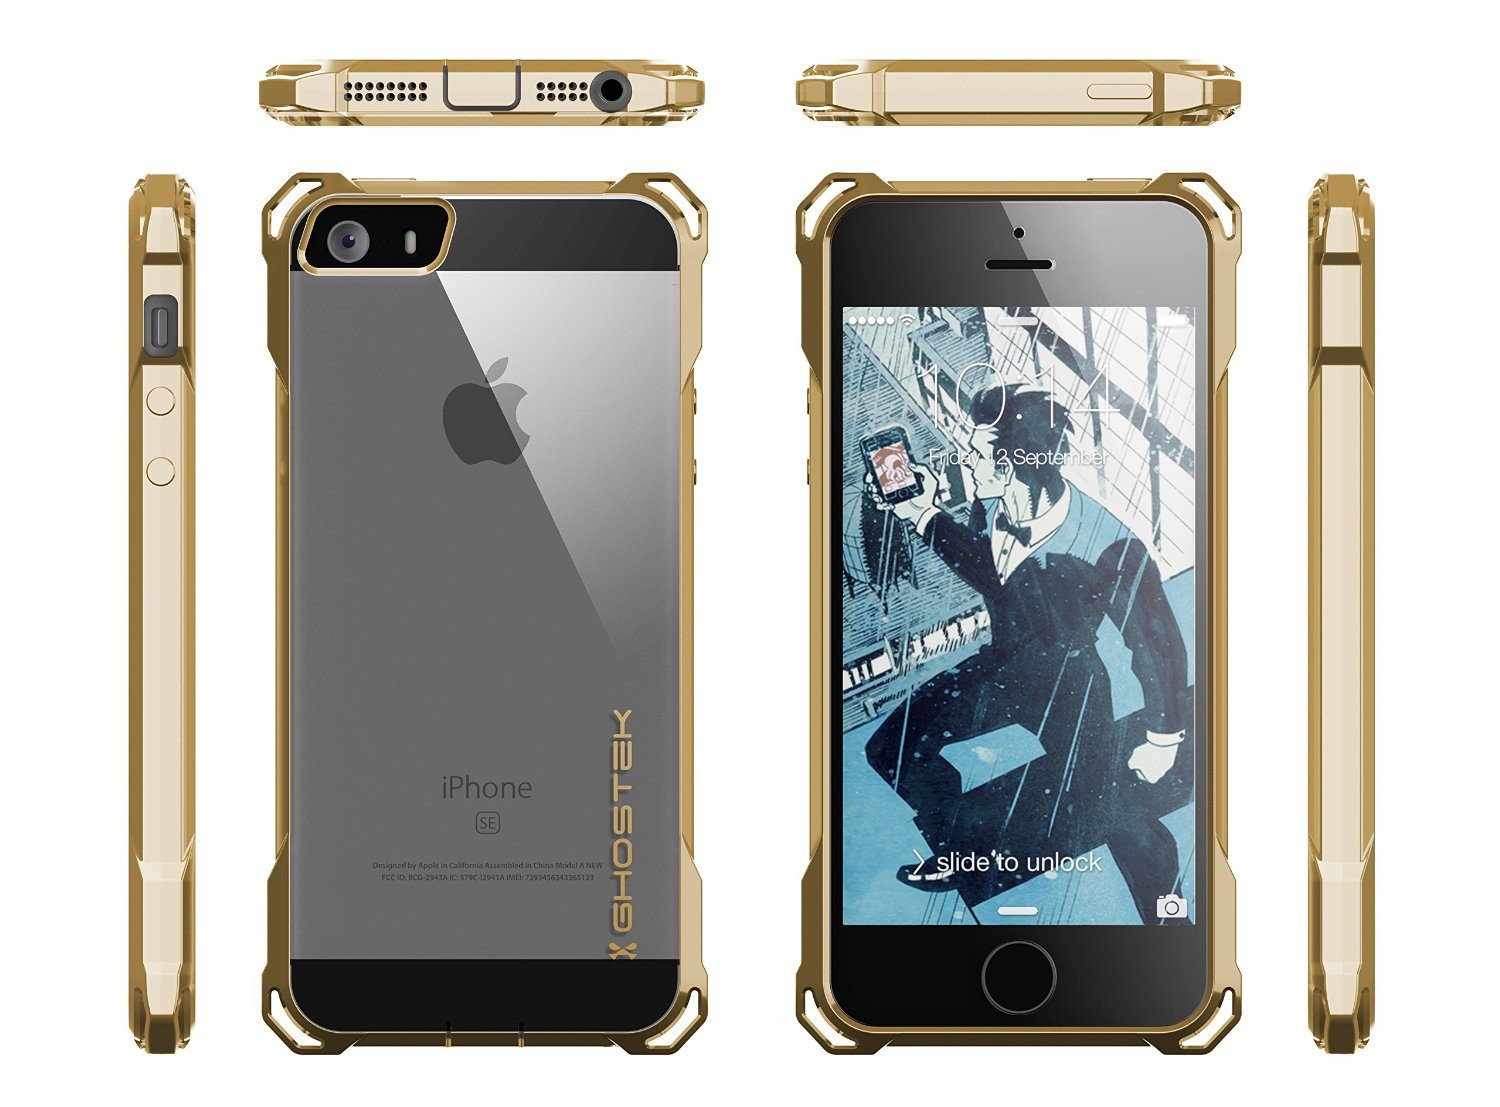 iPhone SE Case, Ghostek® Covert Gold, Premium Impact Protective Armor | Lifetime Warranty Exchange